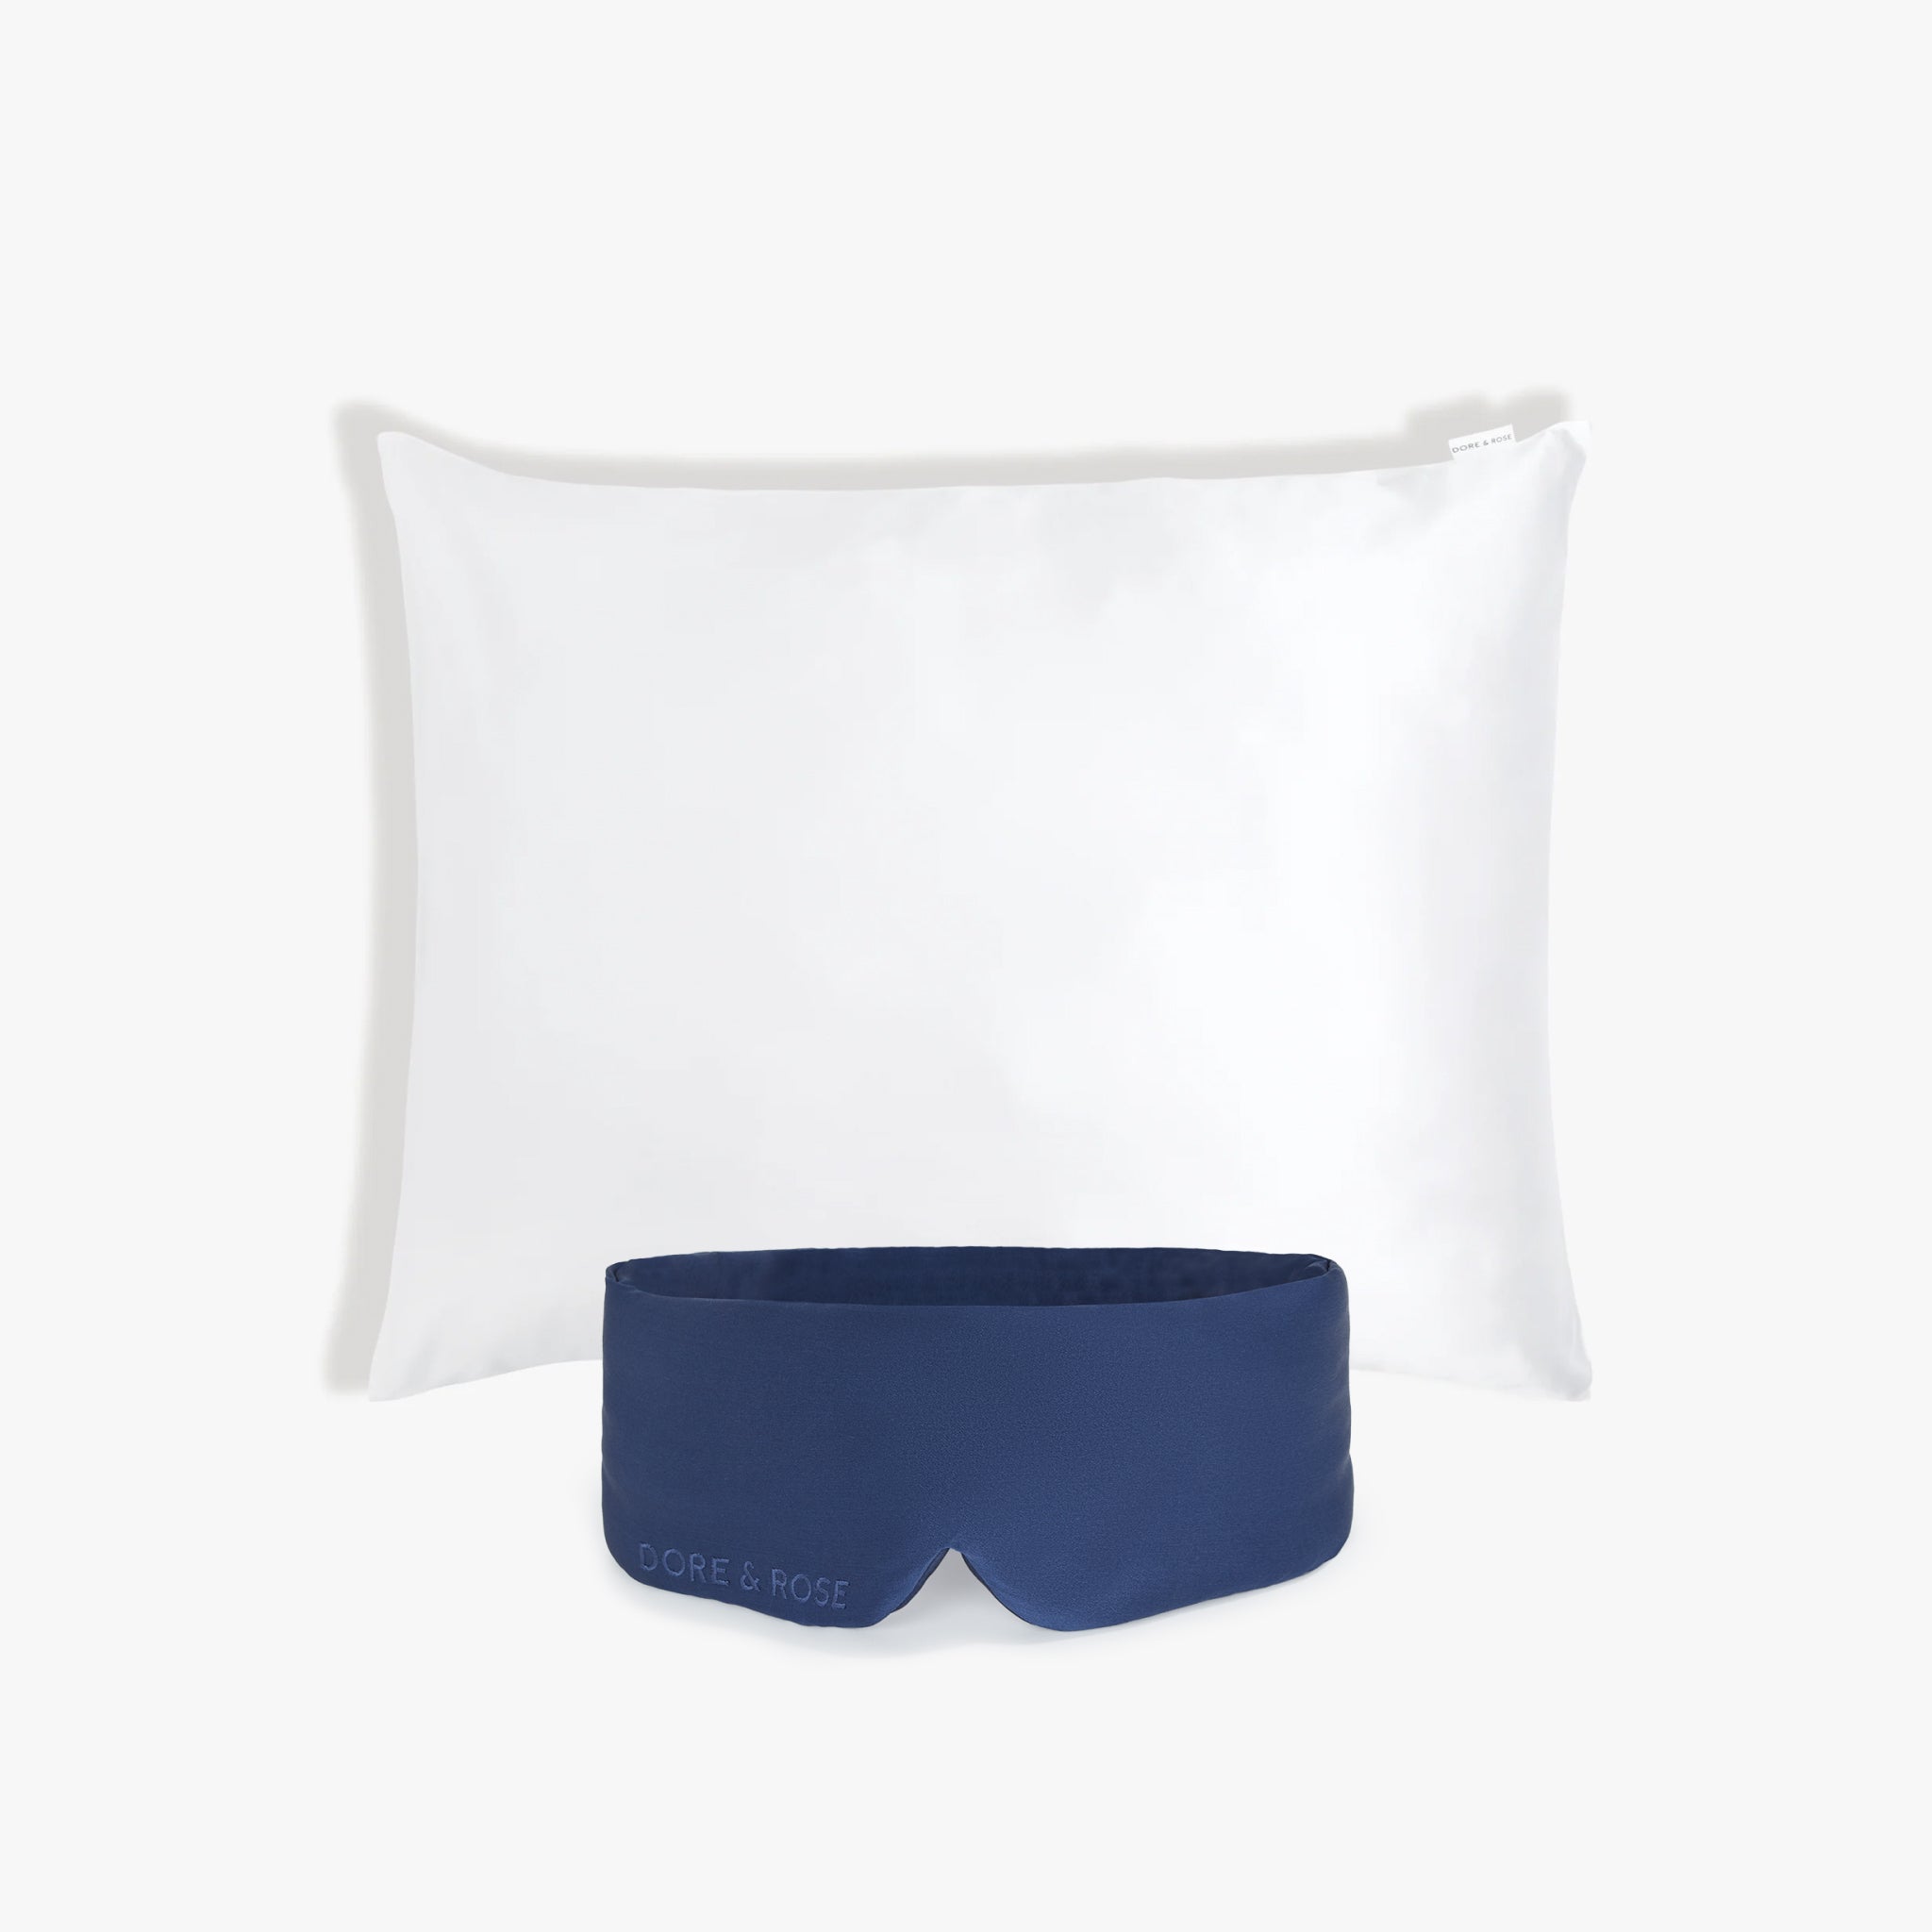 Big Side Sleeper Pillow, 70 X 40 Cm, Anti Acne Cushion, Anti Aging